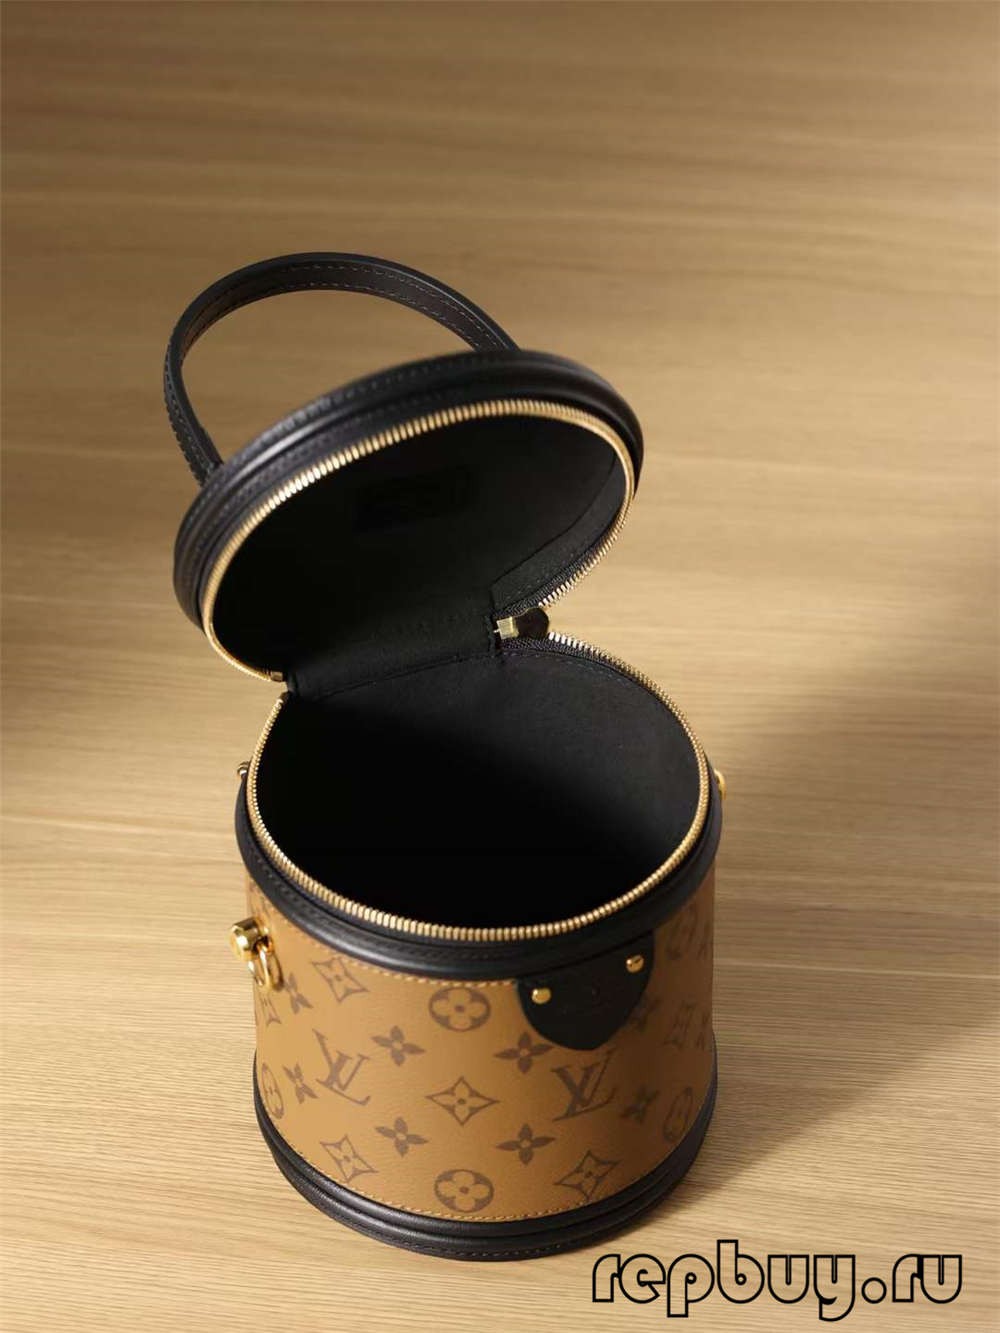 Louis Vuitton M43986 CANNES top replica handbags Hardware and interior pocket details (2022 Updated)-Best Quality Fake designer Bag Review, Replica designer bag ru